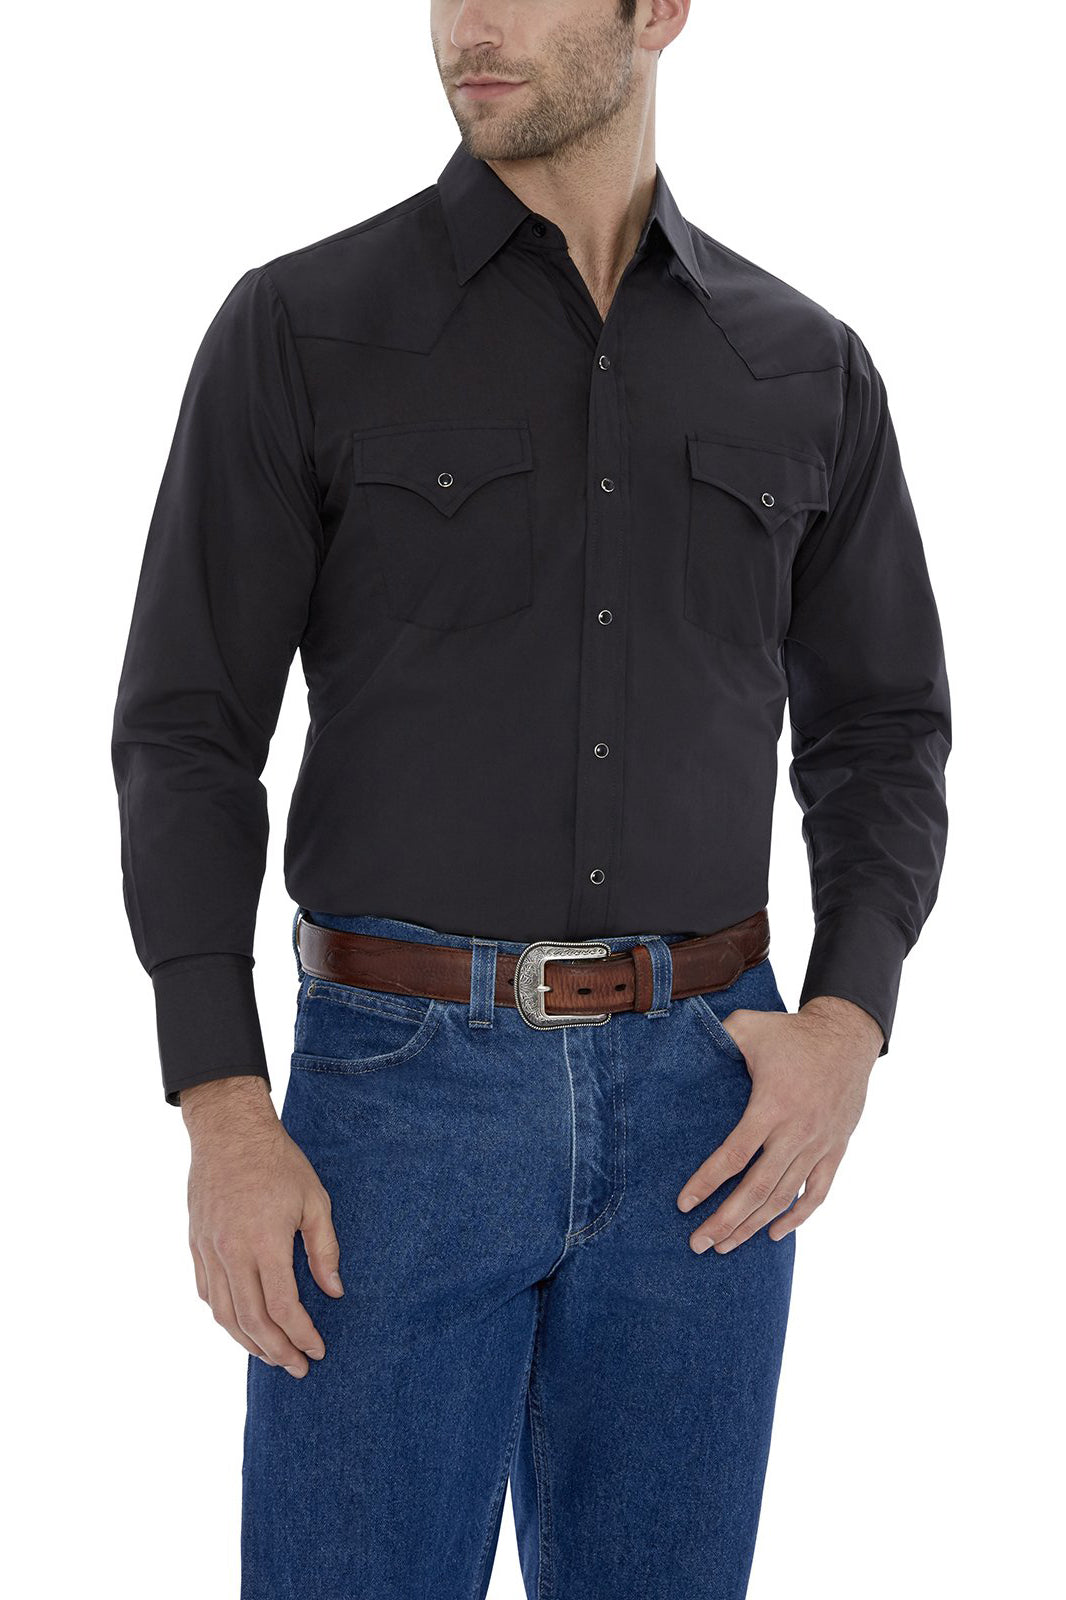 Ely & Walker Solid Black Western Shirt/Easy Care